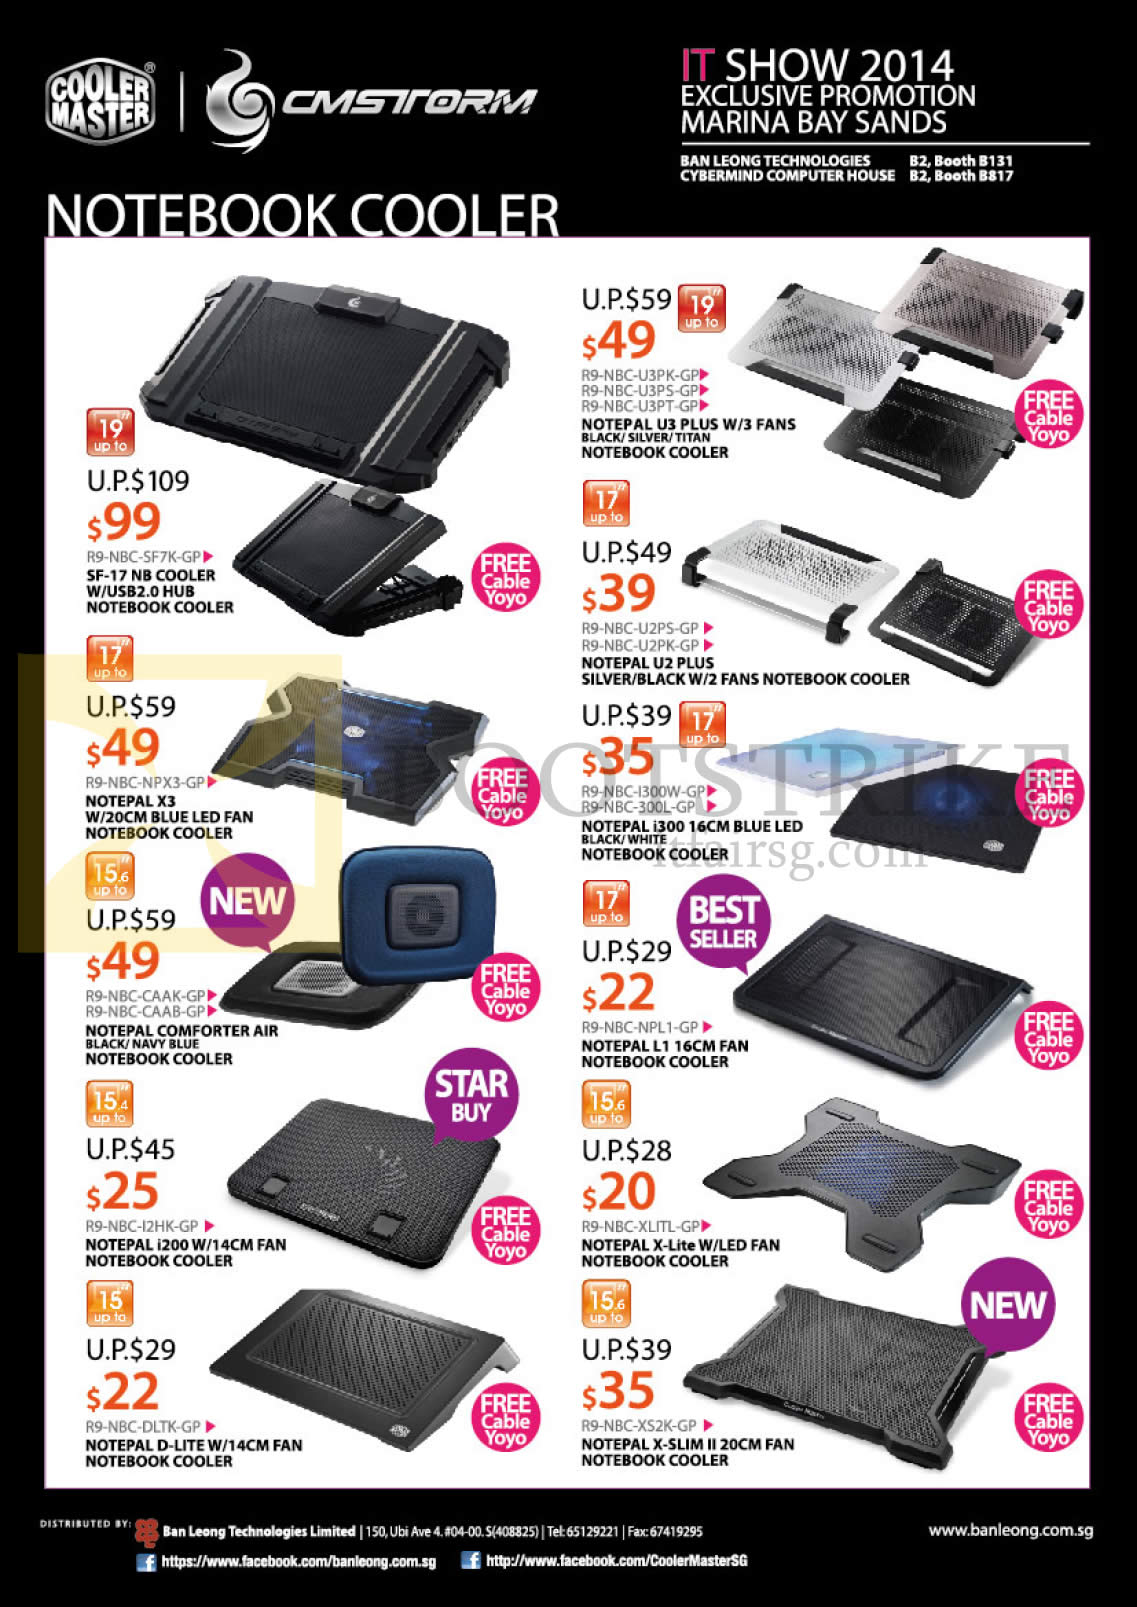 IT SHOW 2014 price list image brochure of Cooler Master CMStorm Notebook Coolers Notepal R9-NBC-CAAK-GP, XS2K-GP, NPL1-GP, U2PS-GP, U2PK-GP